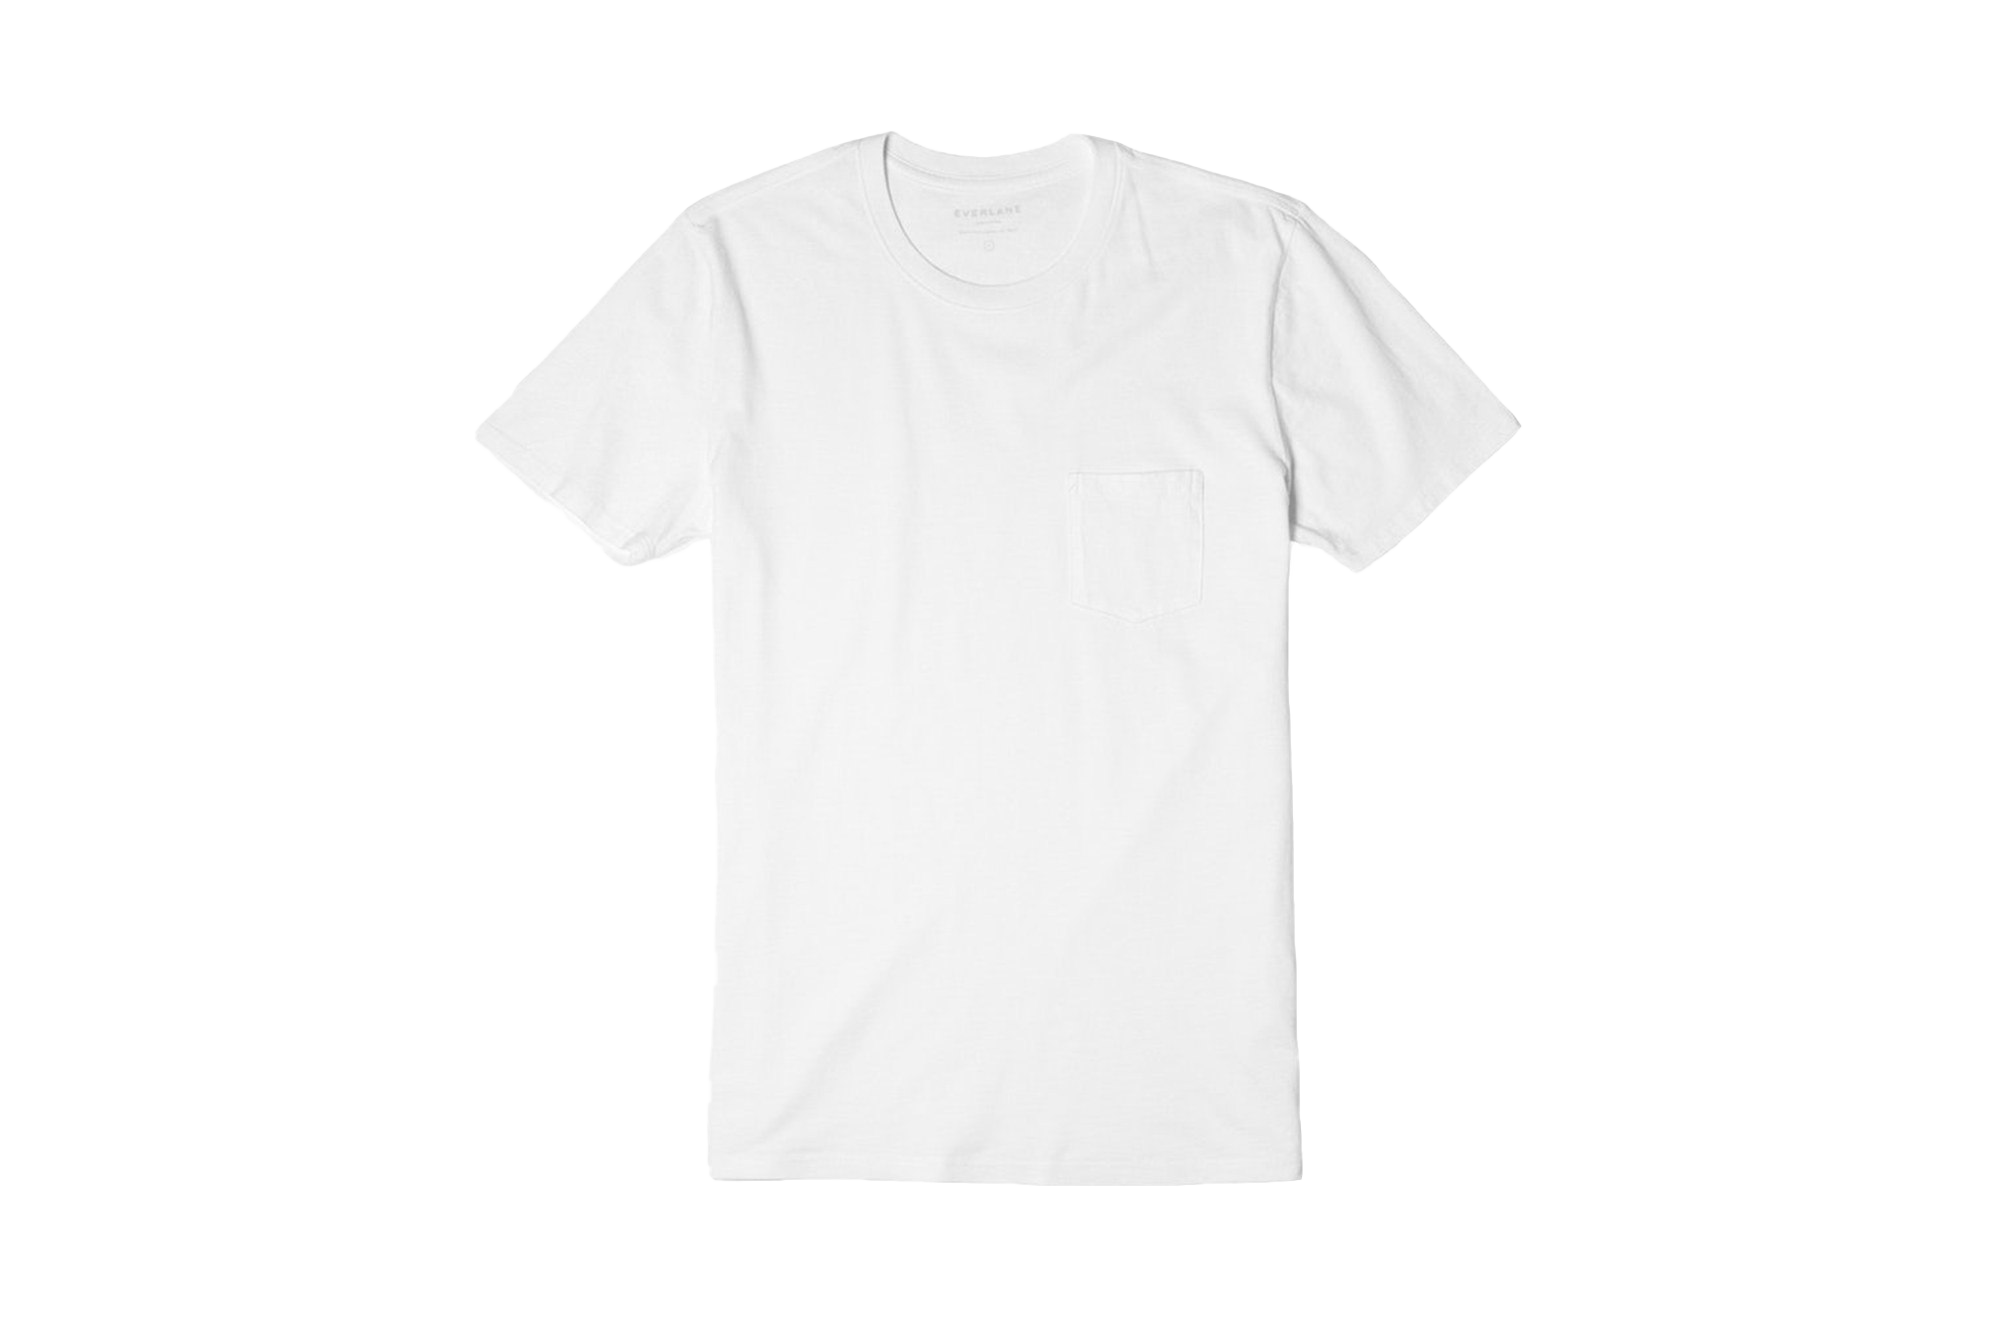 Download Plain White T-Shirt PNG Image | PNG Arts